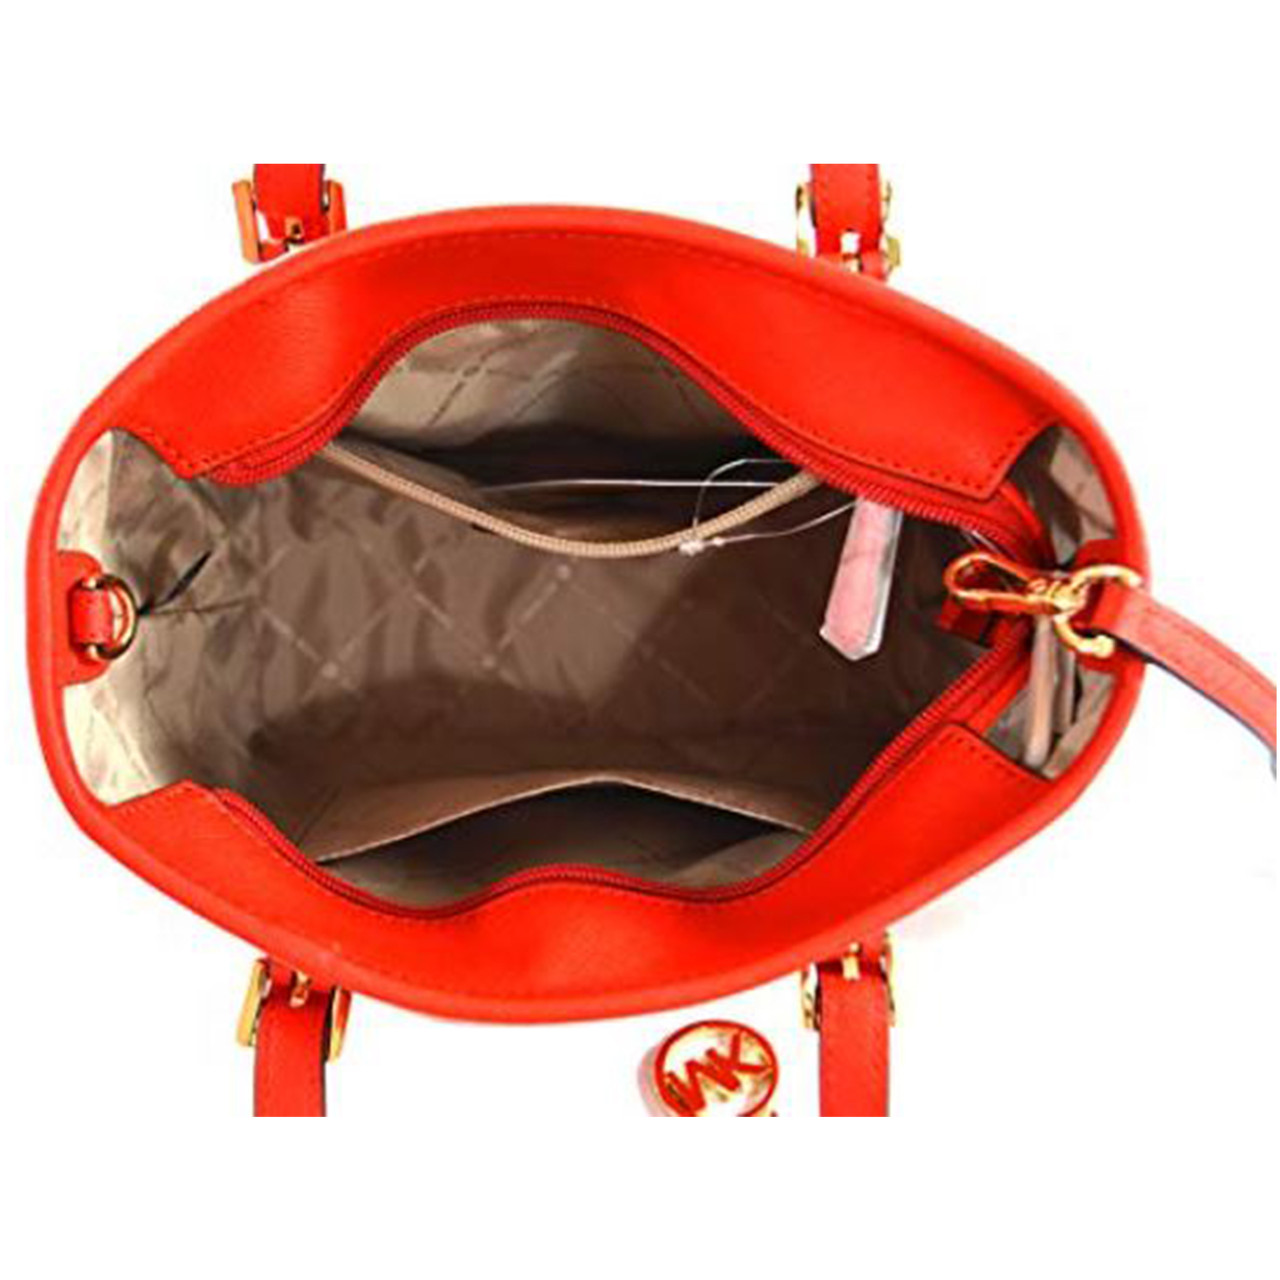 Michael Kors Small Saffiano Leather Convertible Crossbody Bag (black):  Handbags